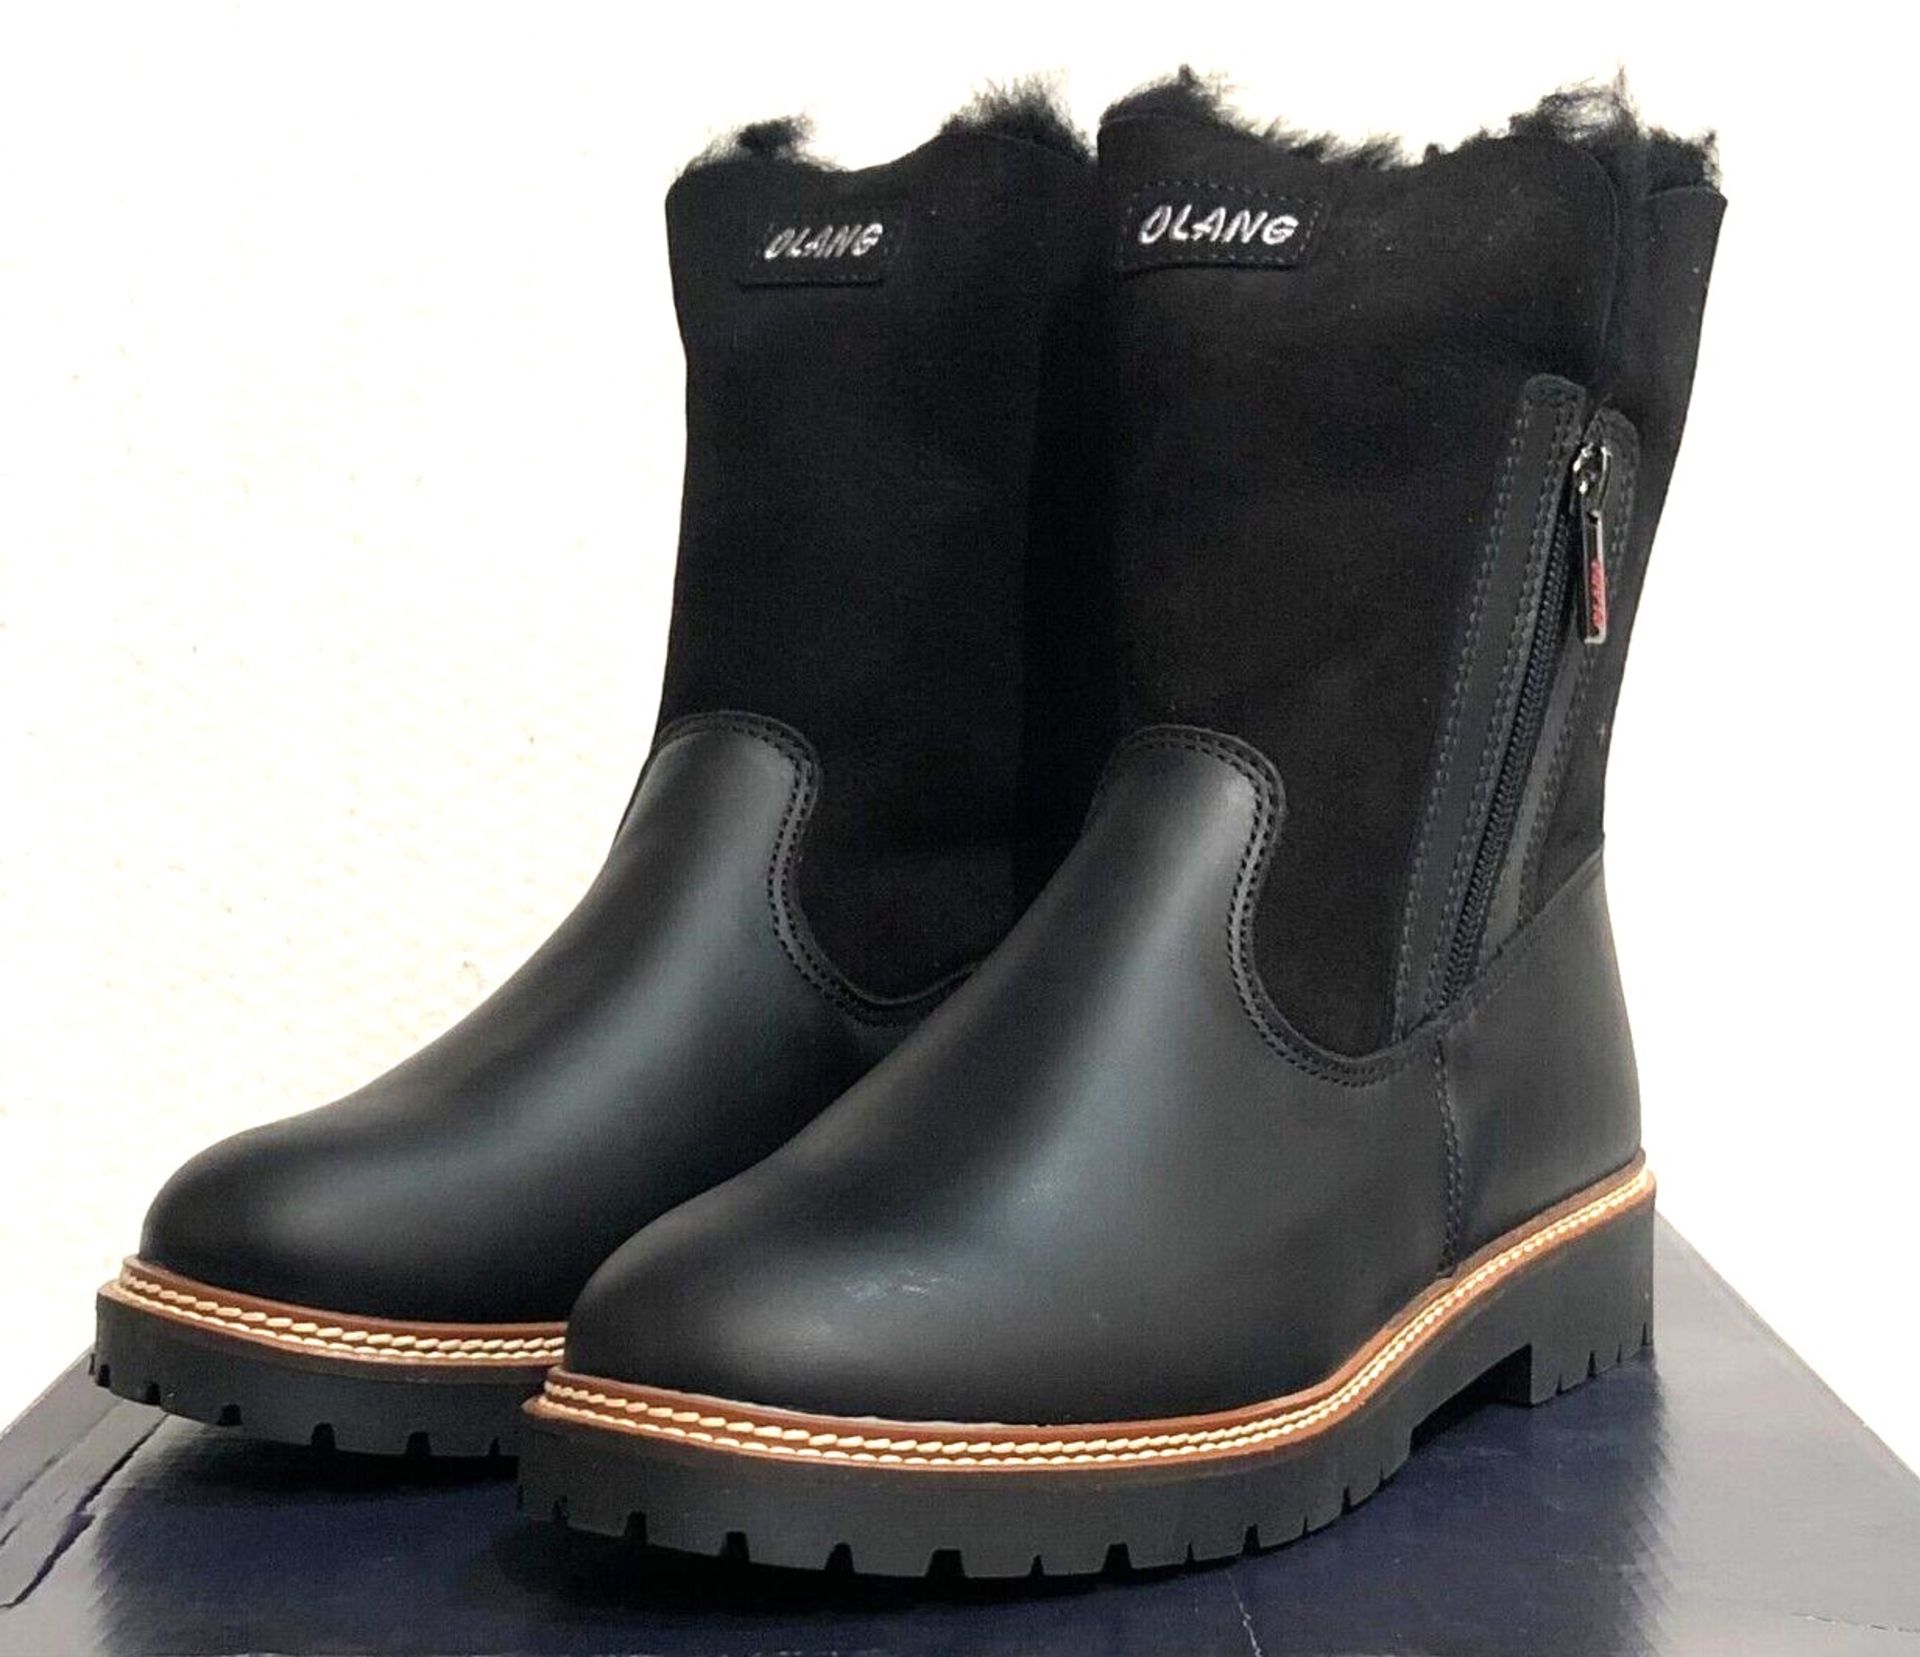 1 x Pair of Designer Olang Women's Winter Boots - Debora 81 Nero - Euro Size 38 - New Boxed - Image 2 of 2